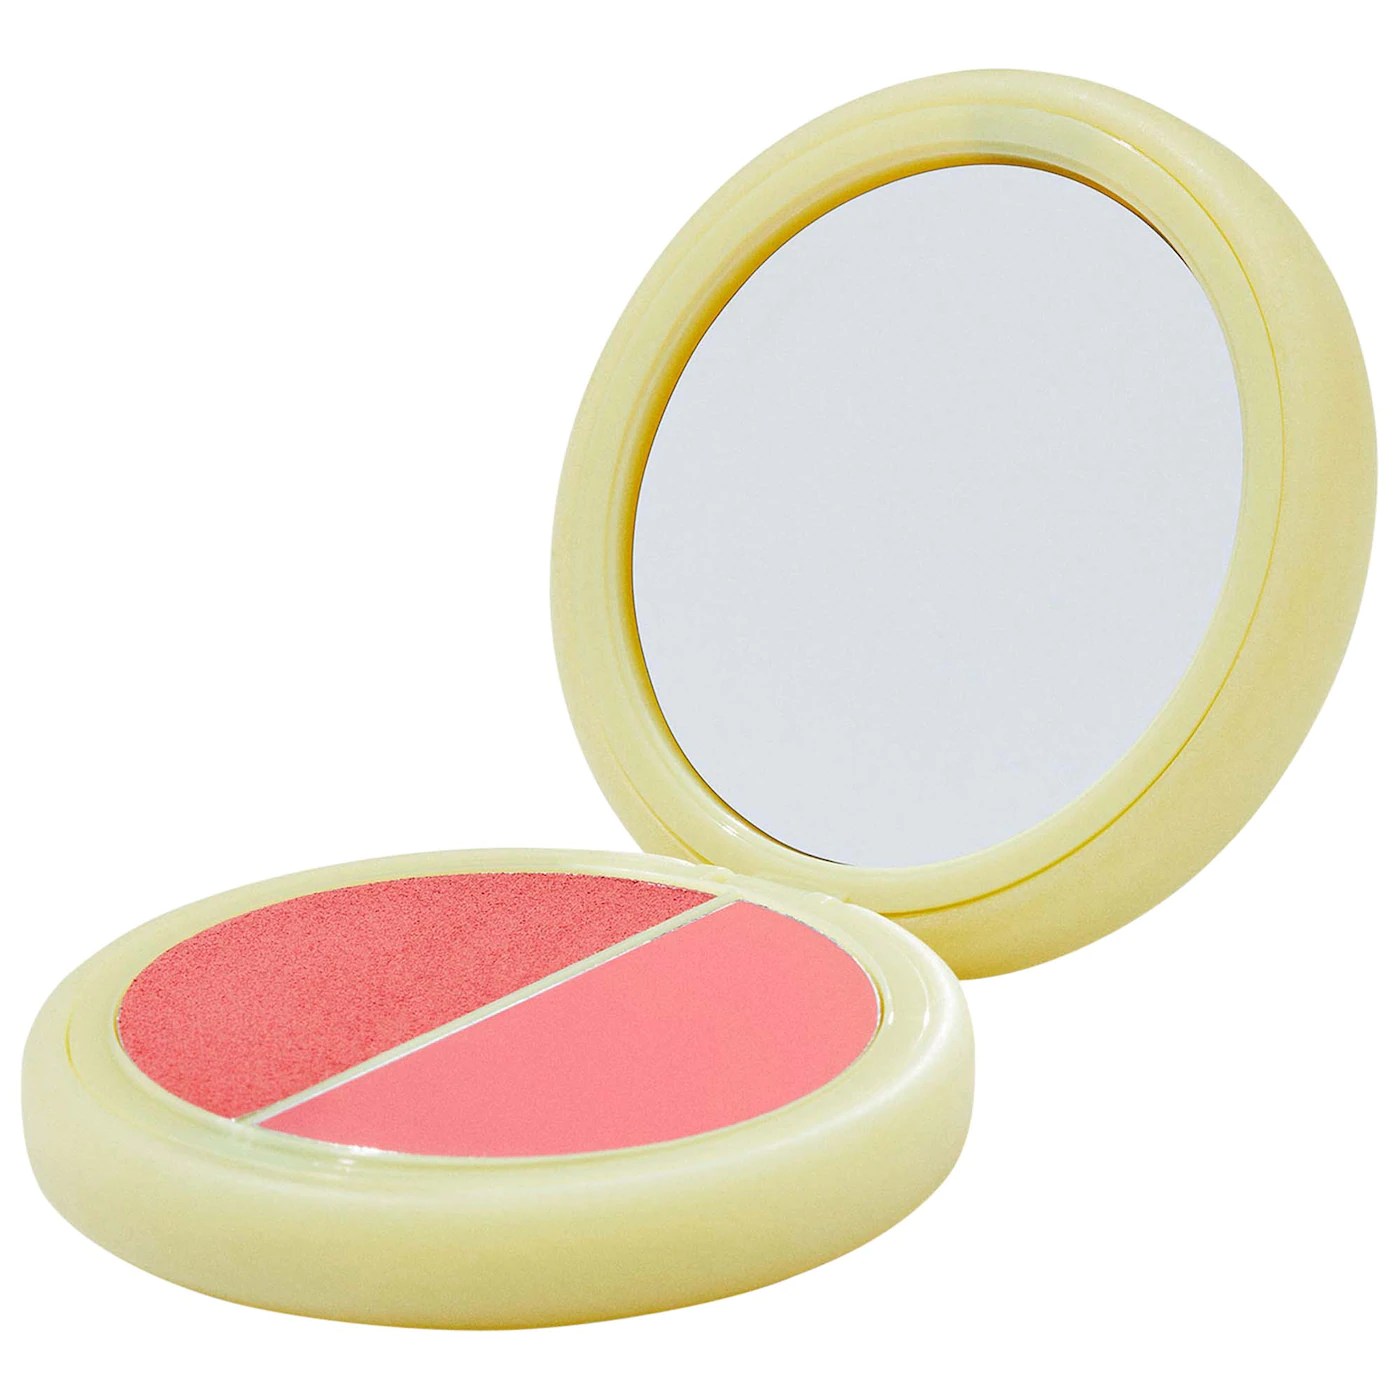 simihaze beauty solar tint cream blush duo on a white background